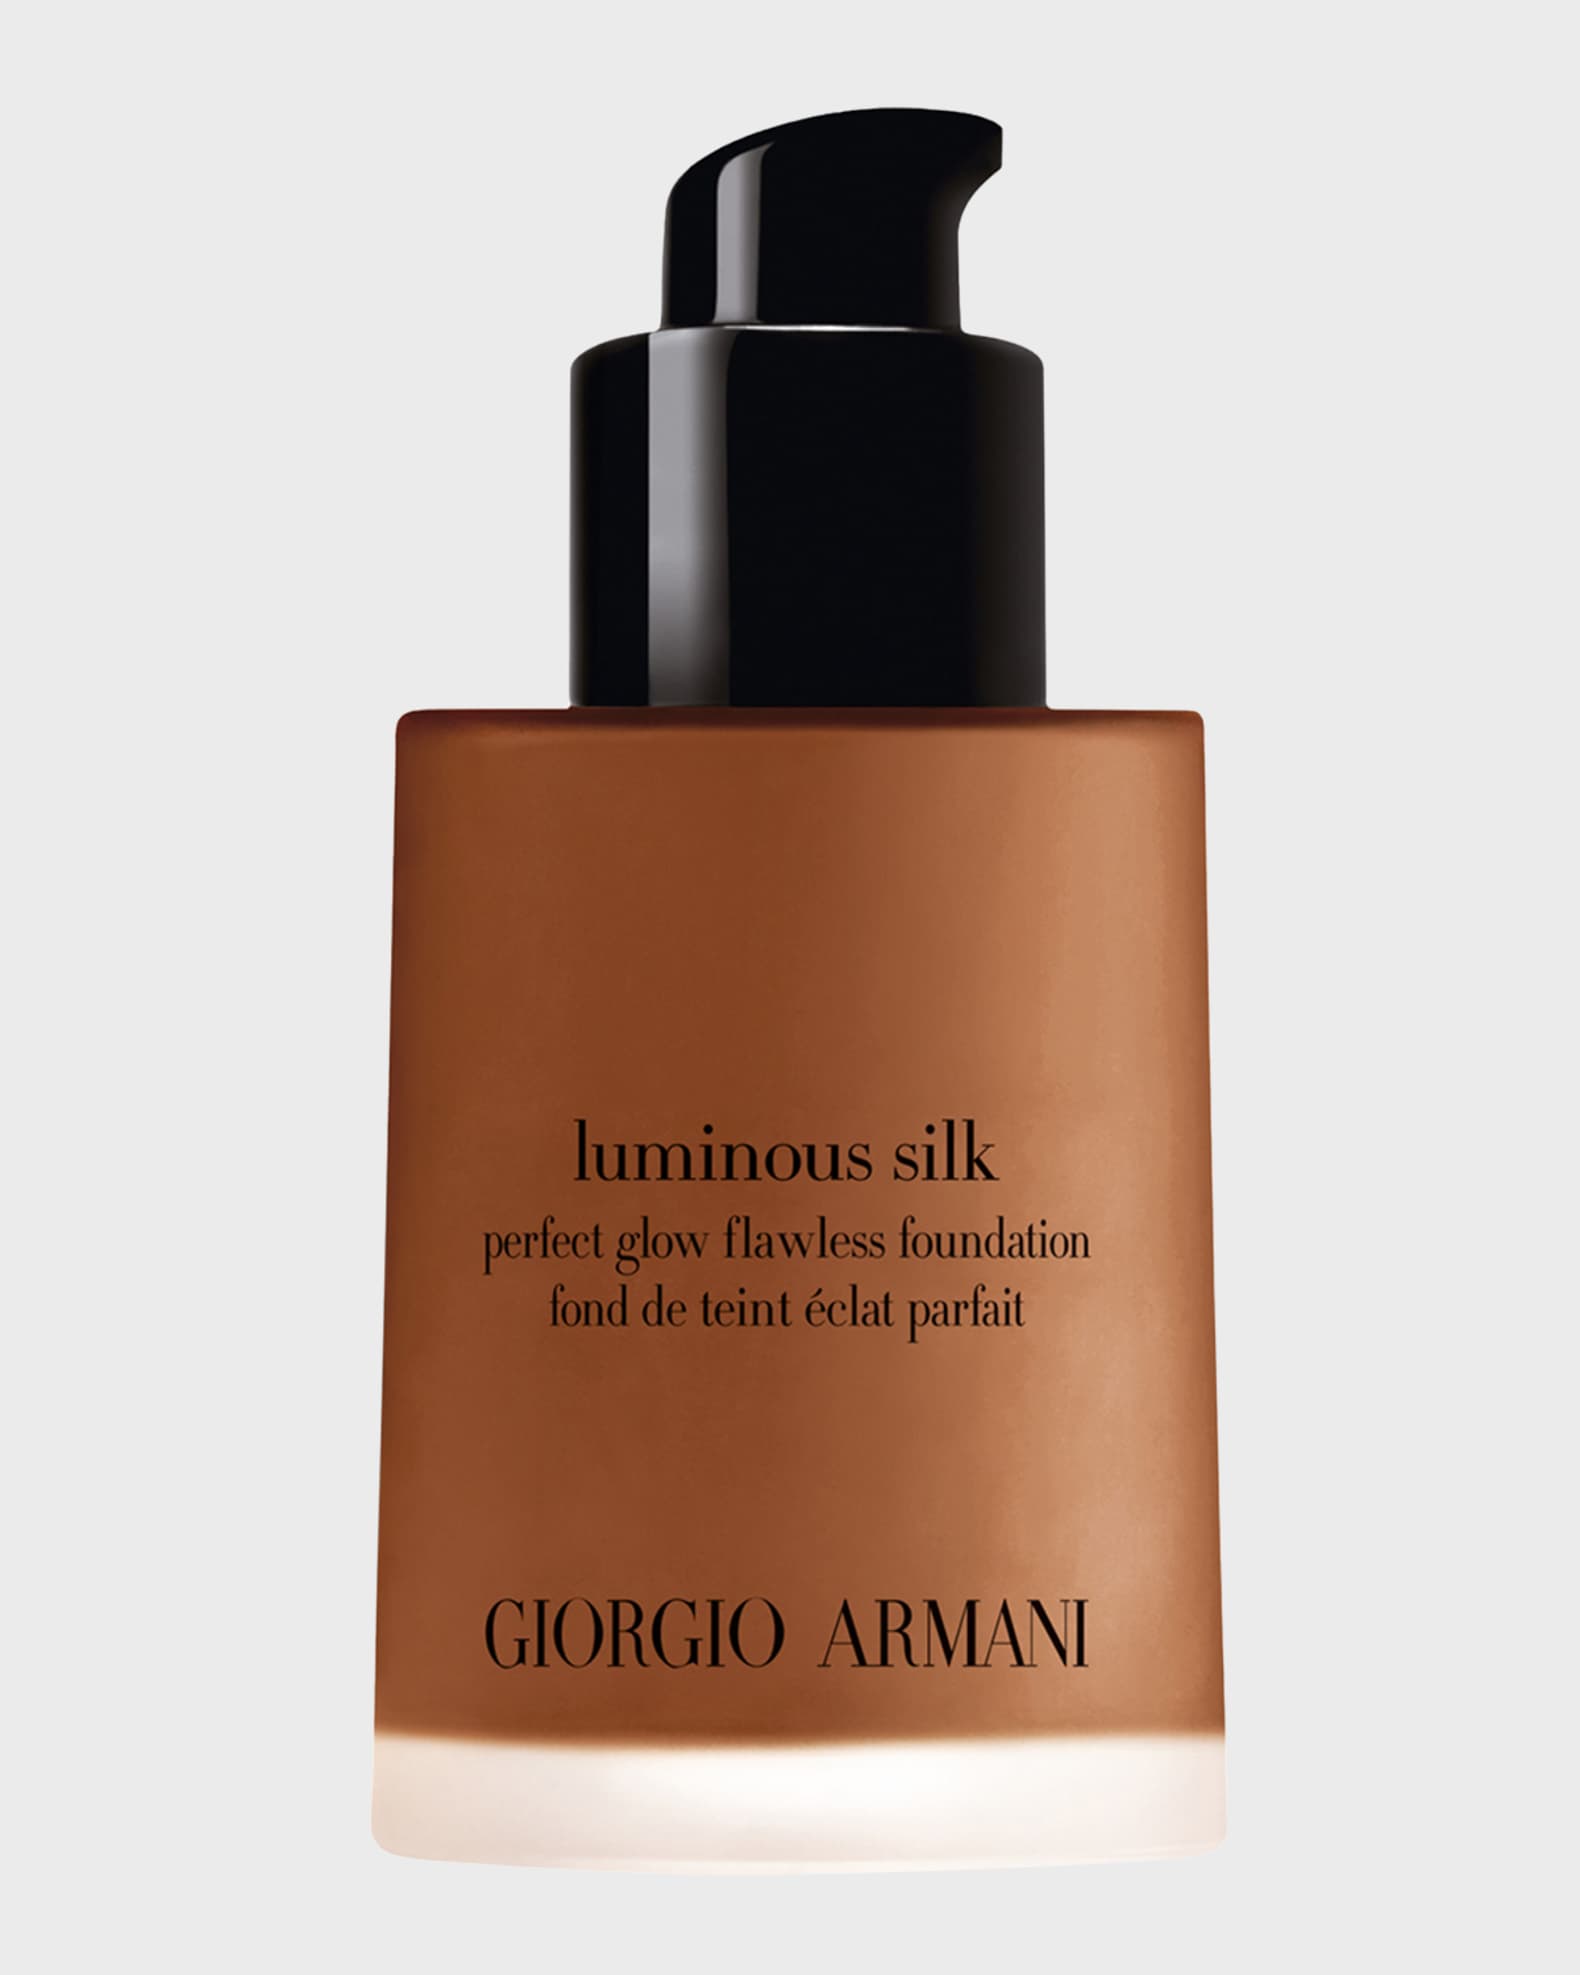 Giorgio Armani Luminous Silk Foundation - 13 Deep Neutral, 1 oz Foundation